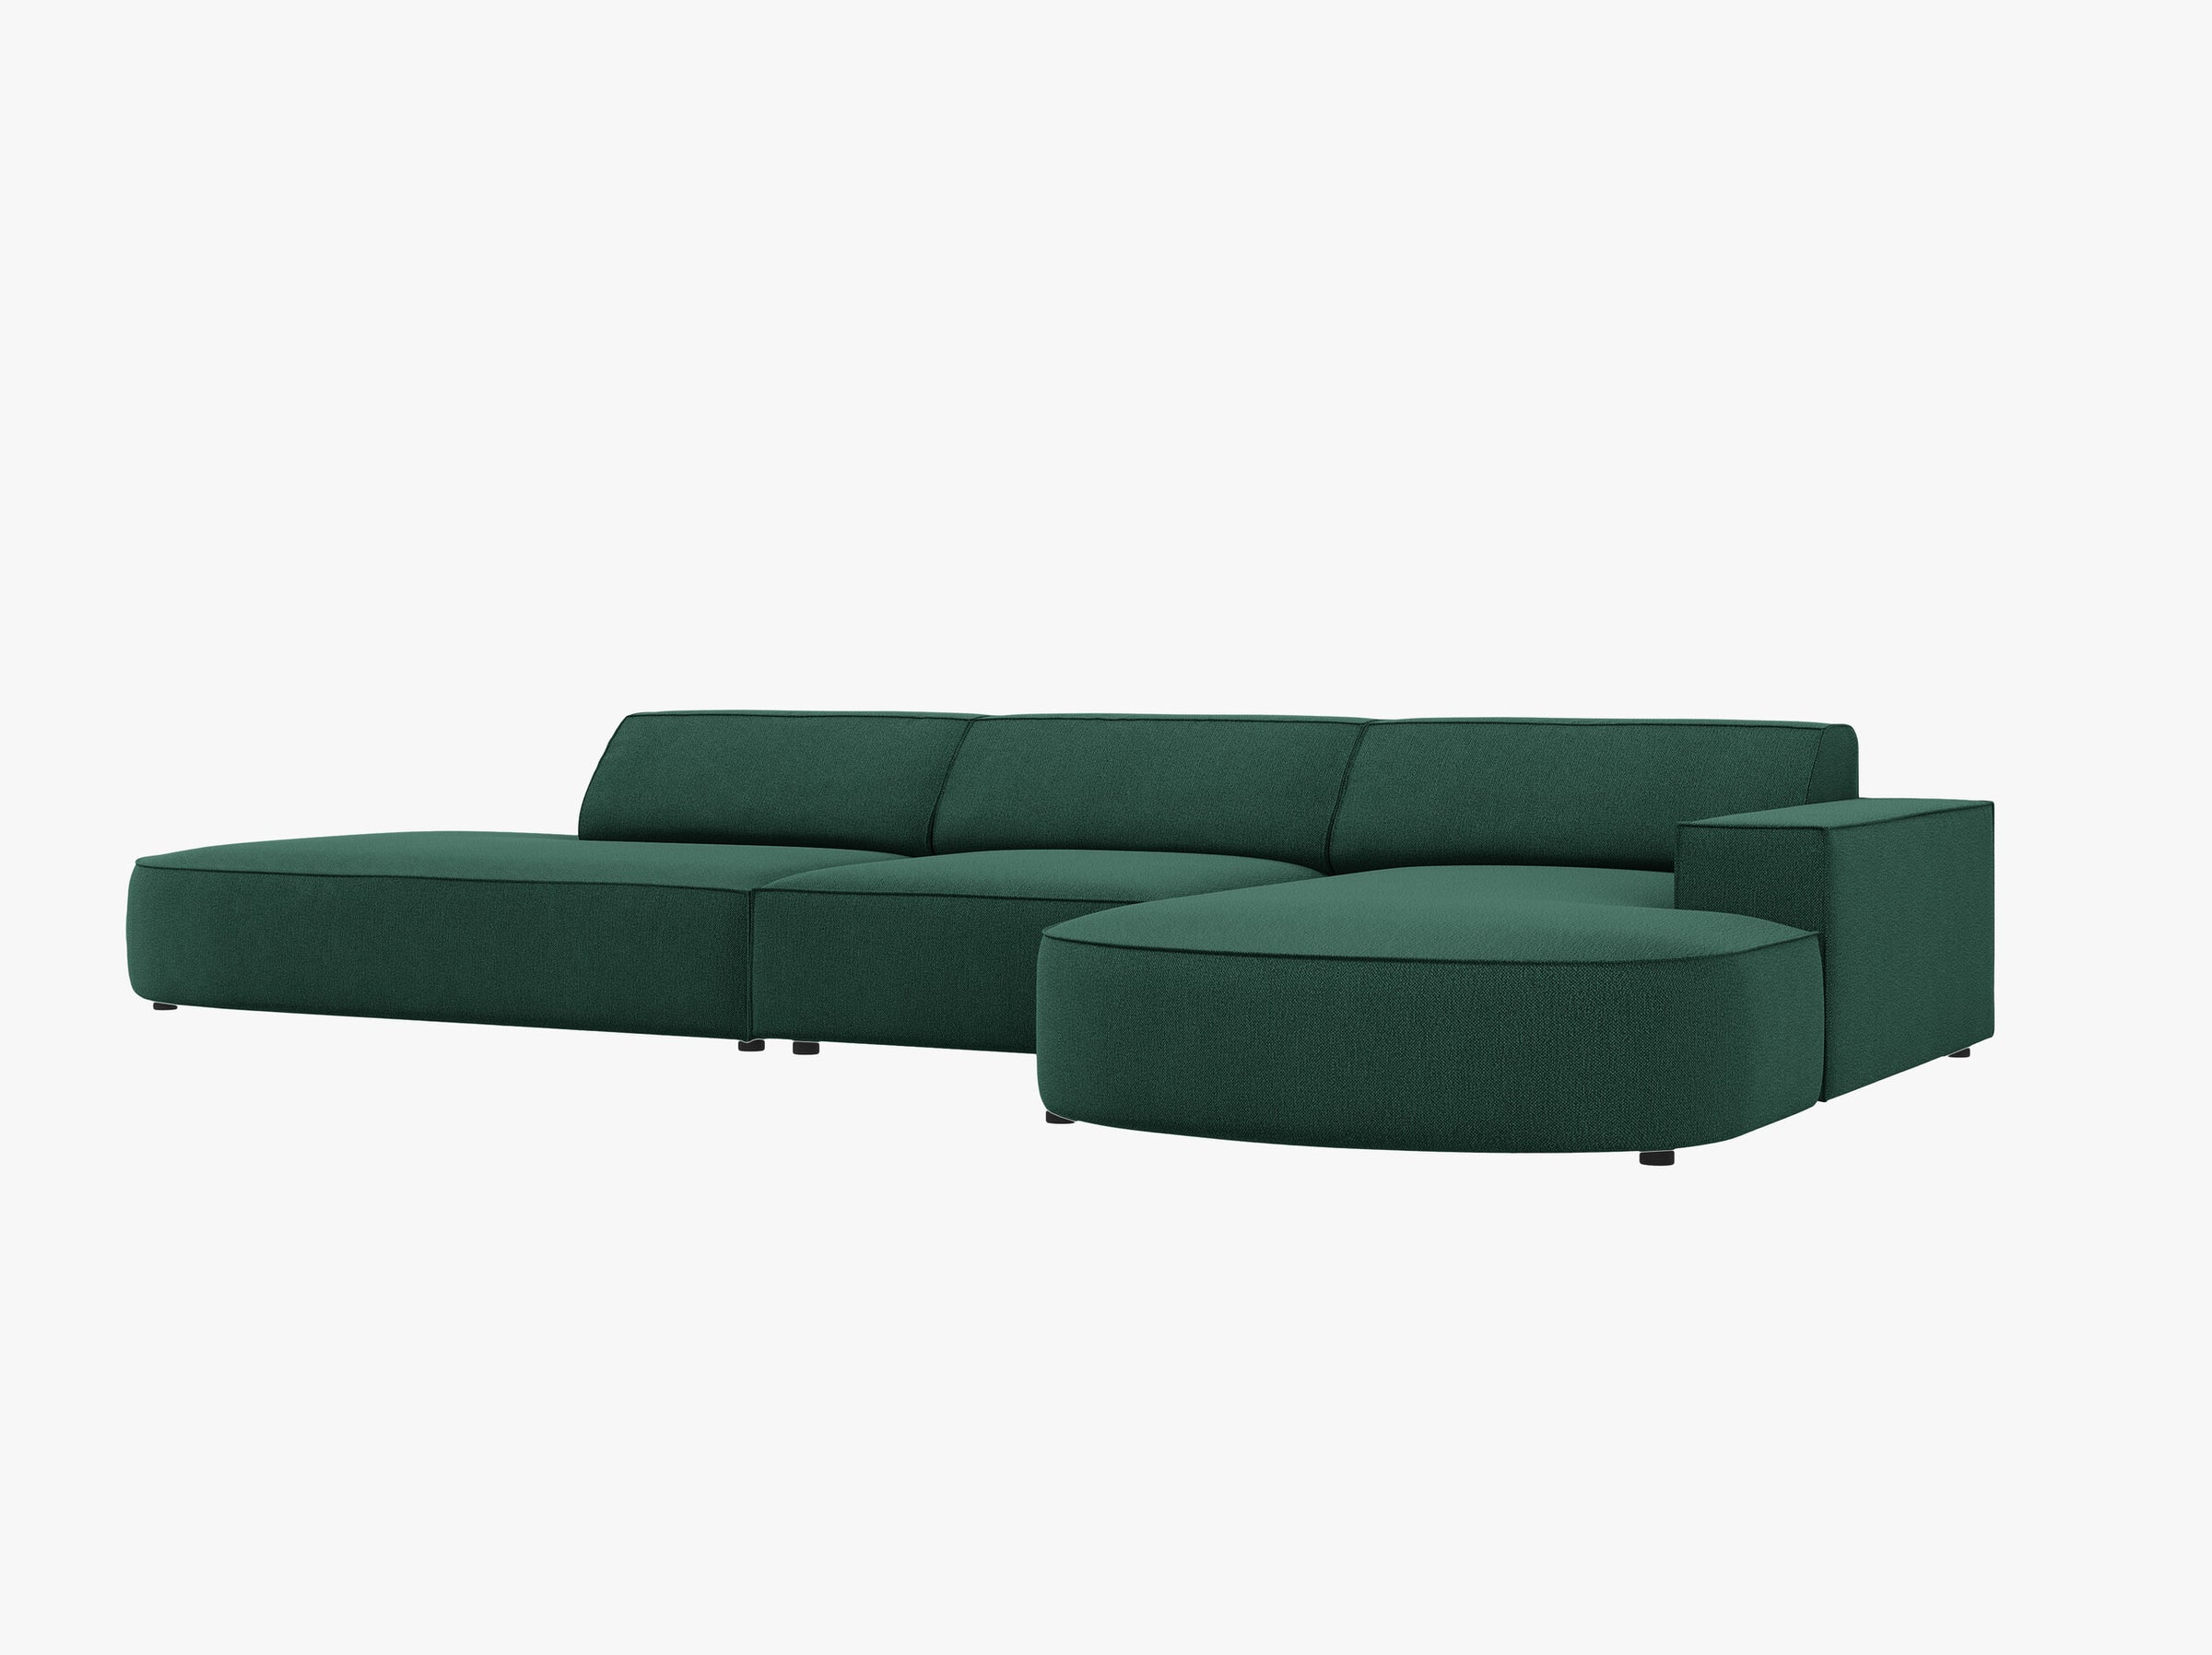 Jodie sofas structured fabric green